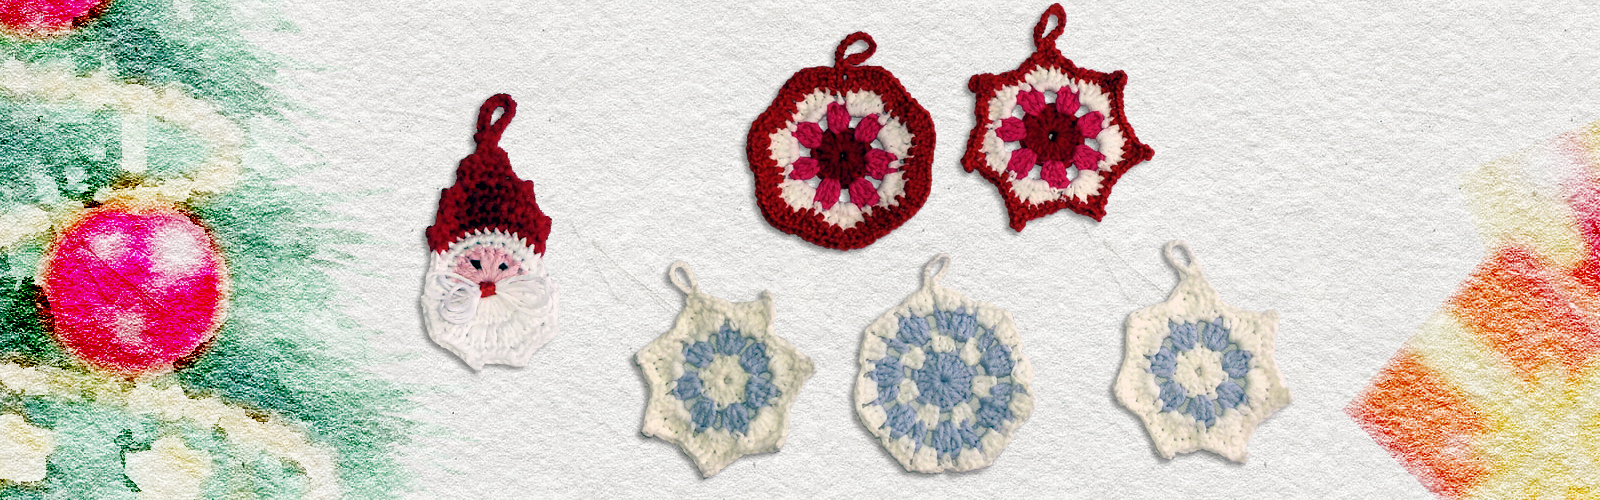 christmas-decorations-crochet-handmade-b